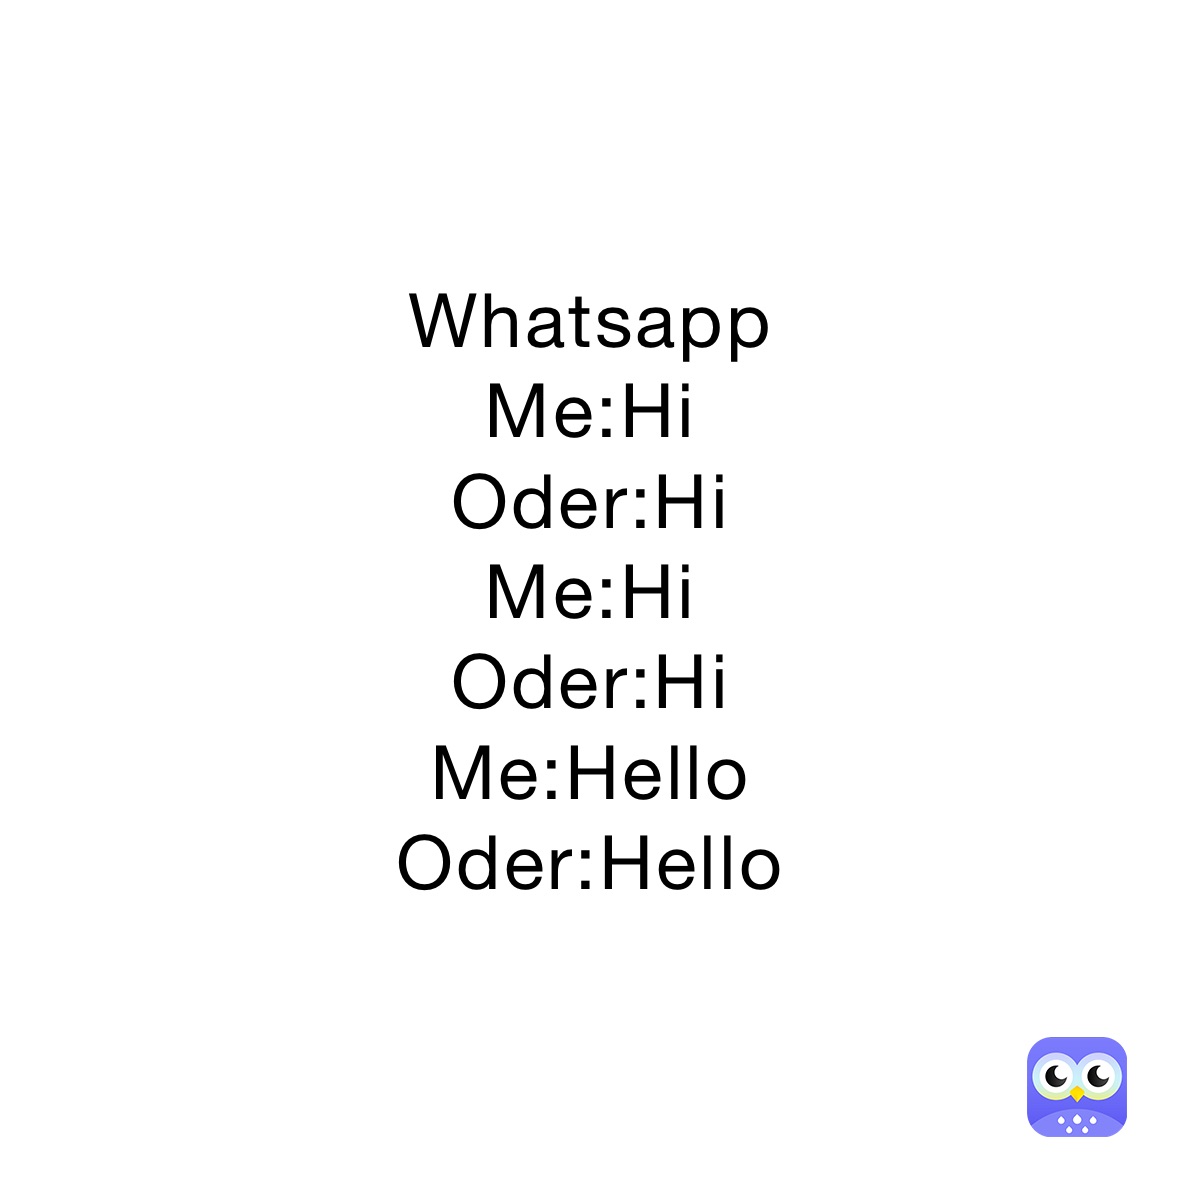 Whatsapp
Me:Hi
Oder:Hi
Me:Hi
Oder:Hi
Me:Hello
Oder:Hello